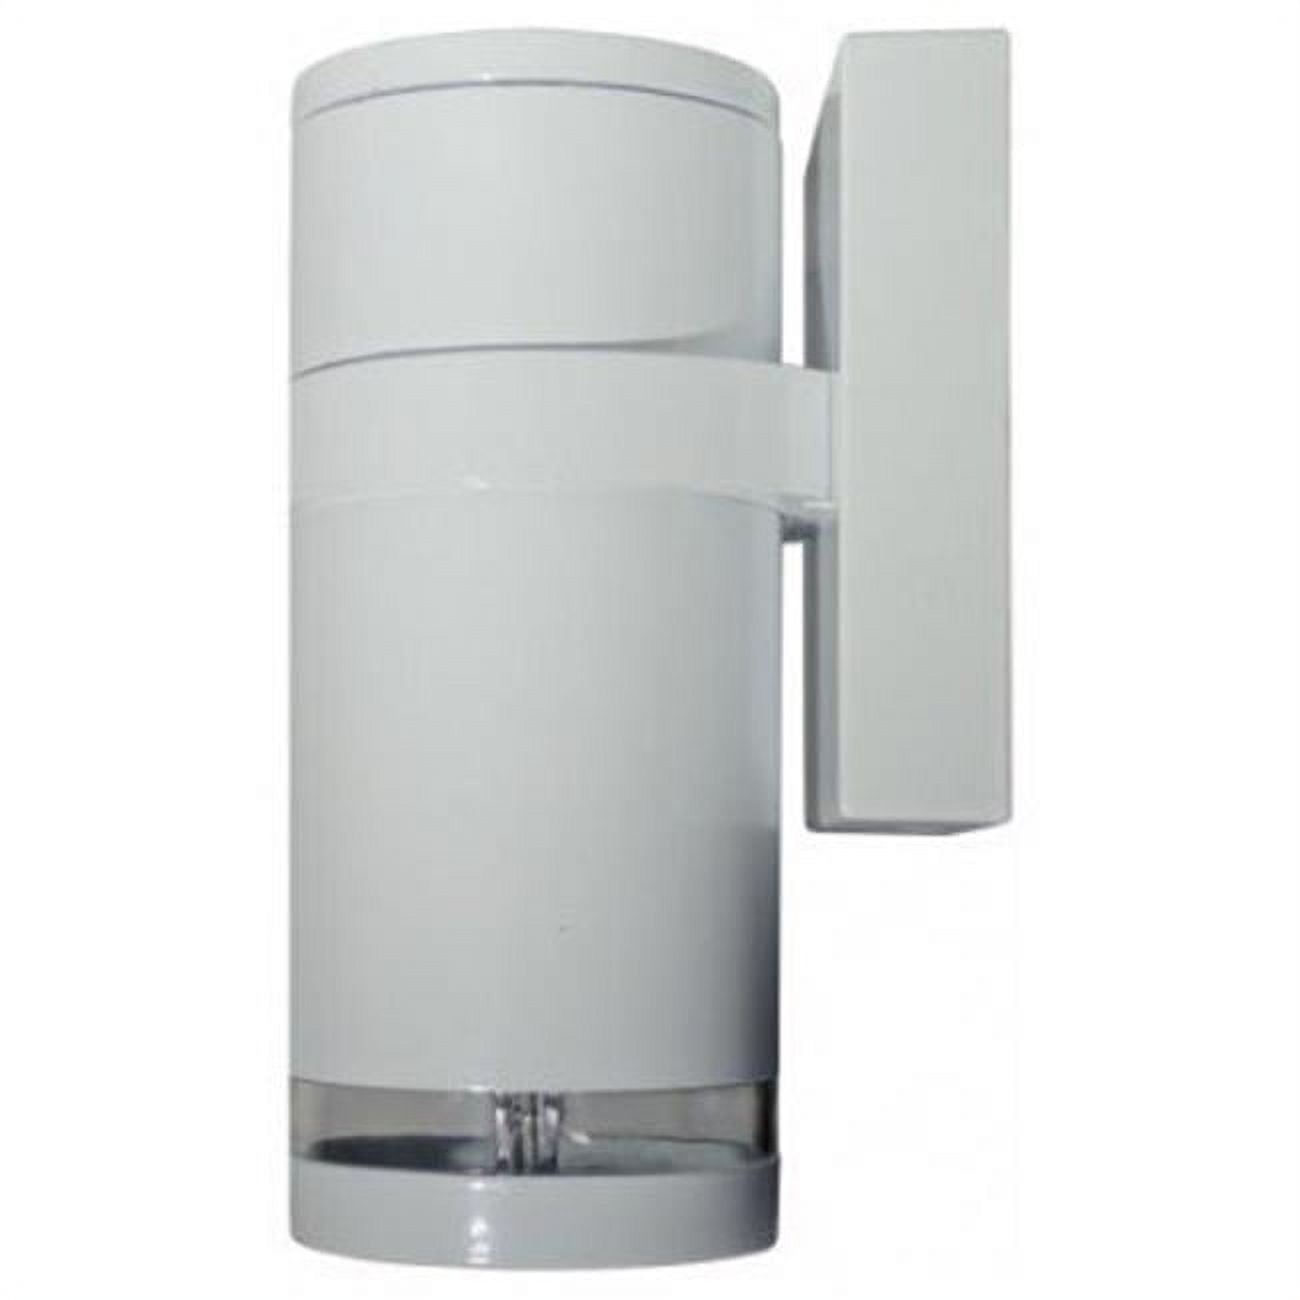 Dw3551-w Powder Coated Cast Aluminum Down Light Wall Fixture, White - 9.22 X 3.94 X 5.55 In.